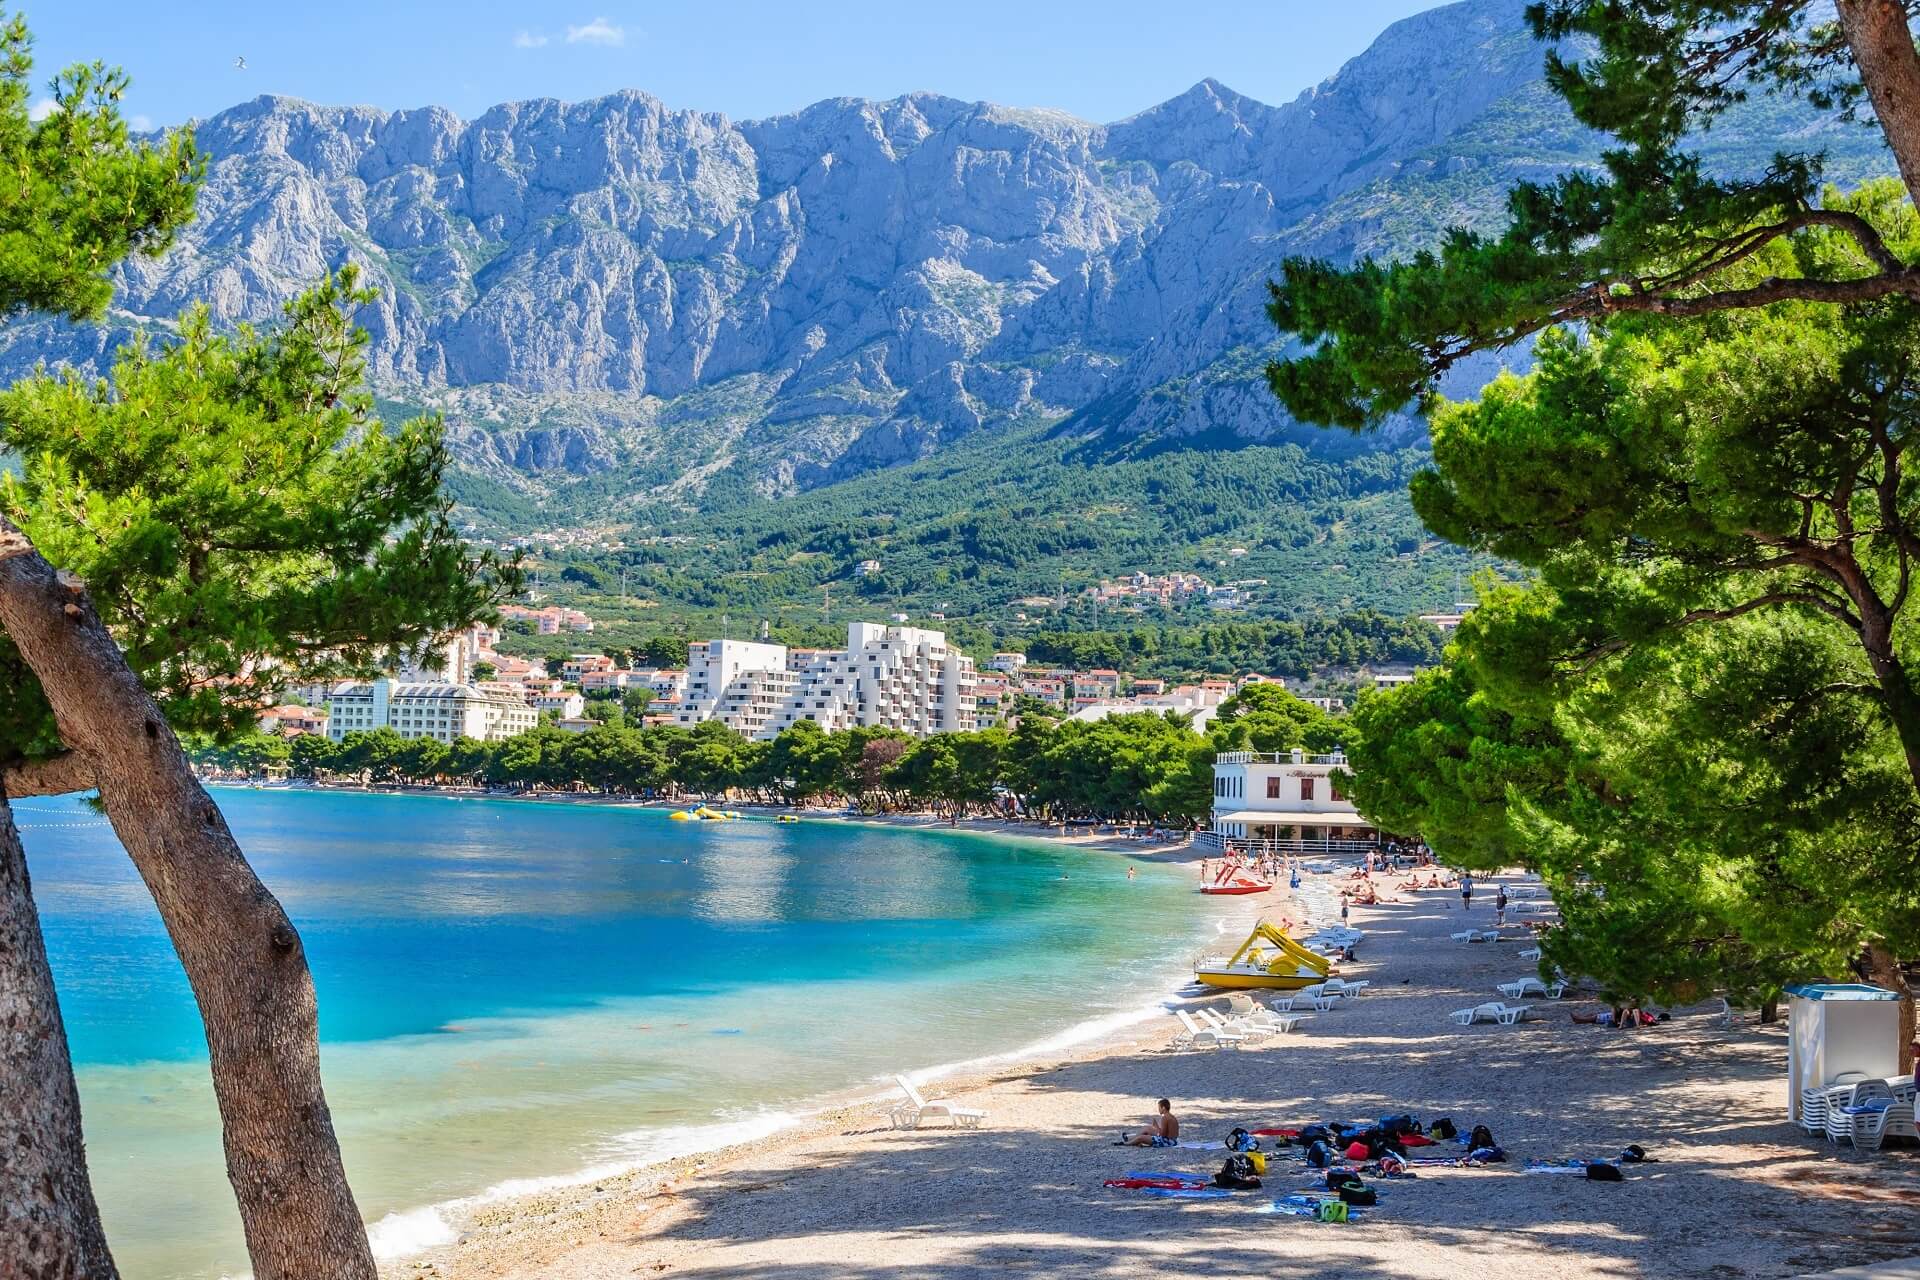  Sandstr 228 nde in Kroatien Die Top 10 vom Experten Urlaubsguru